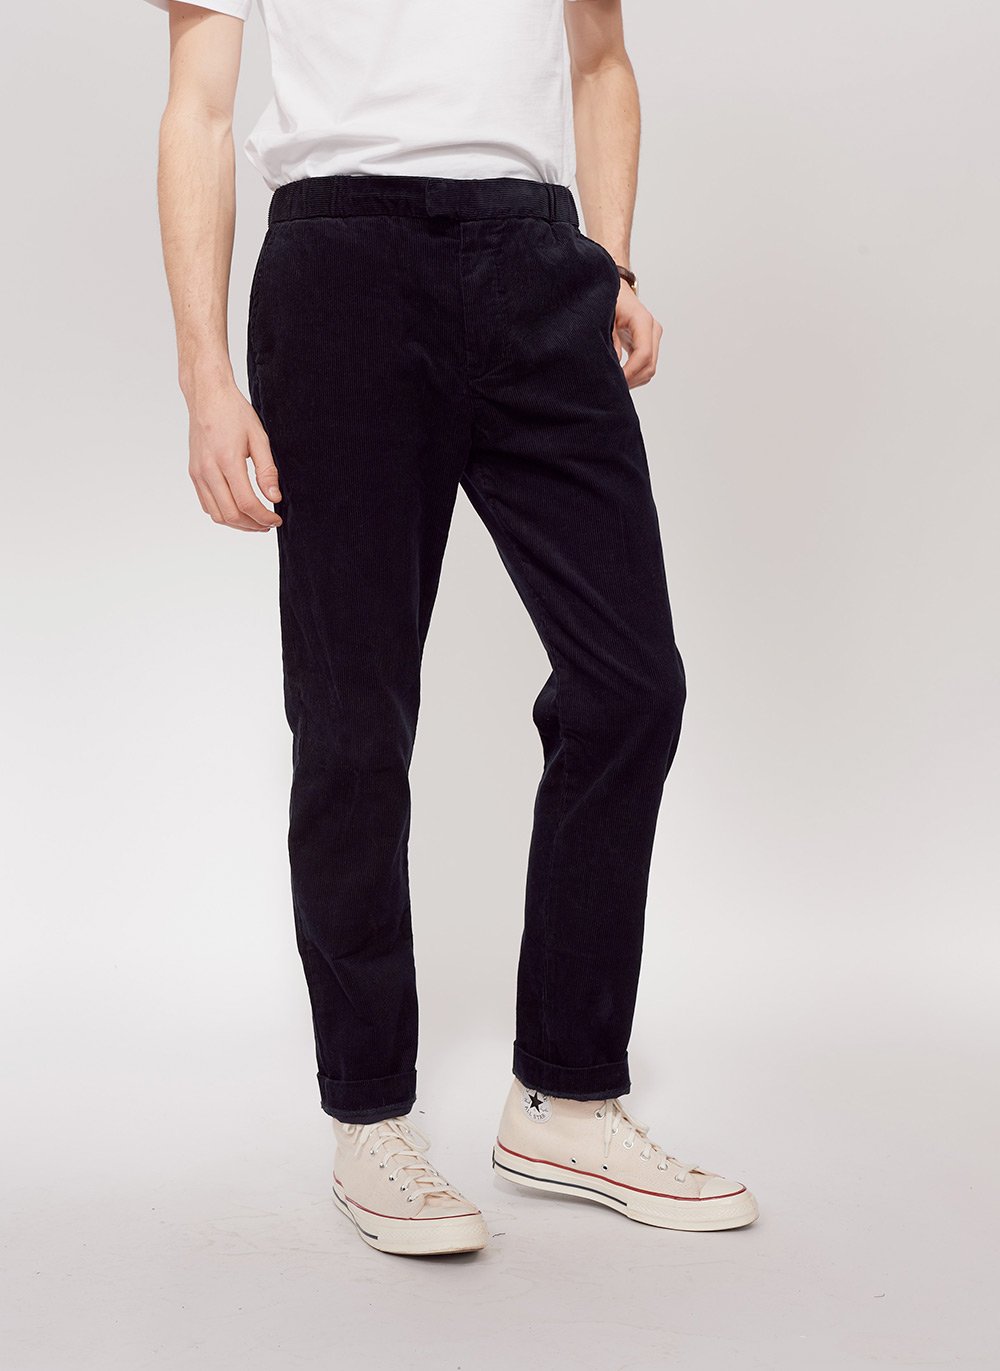 Mens EXPANDING Comfort Fine Needle Cord Trousers 32-46 Pants Ribbed Corduroy  | eBay